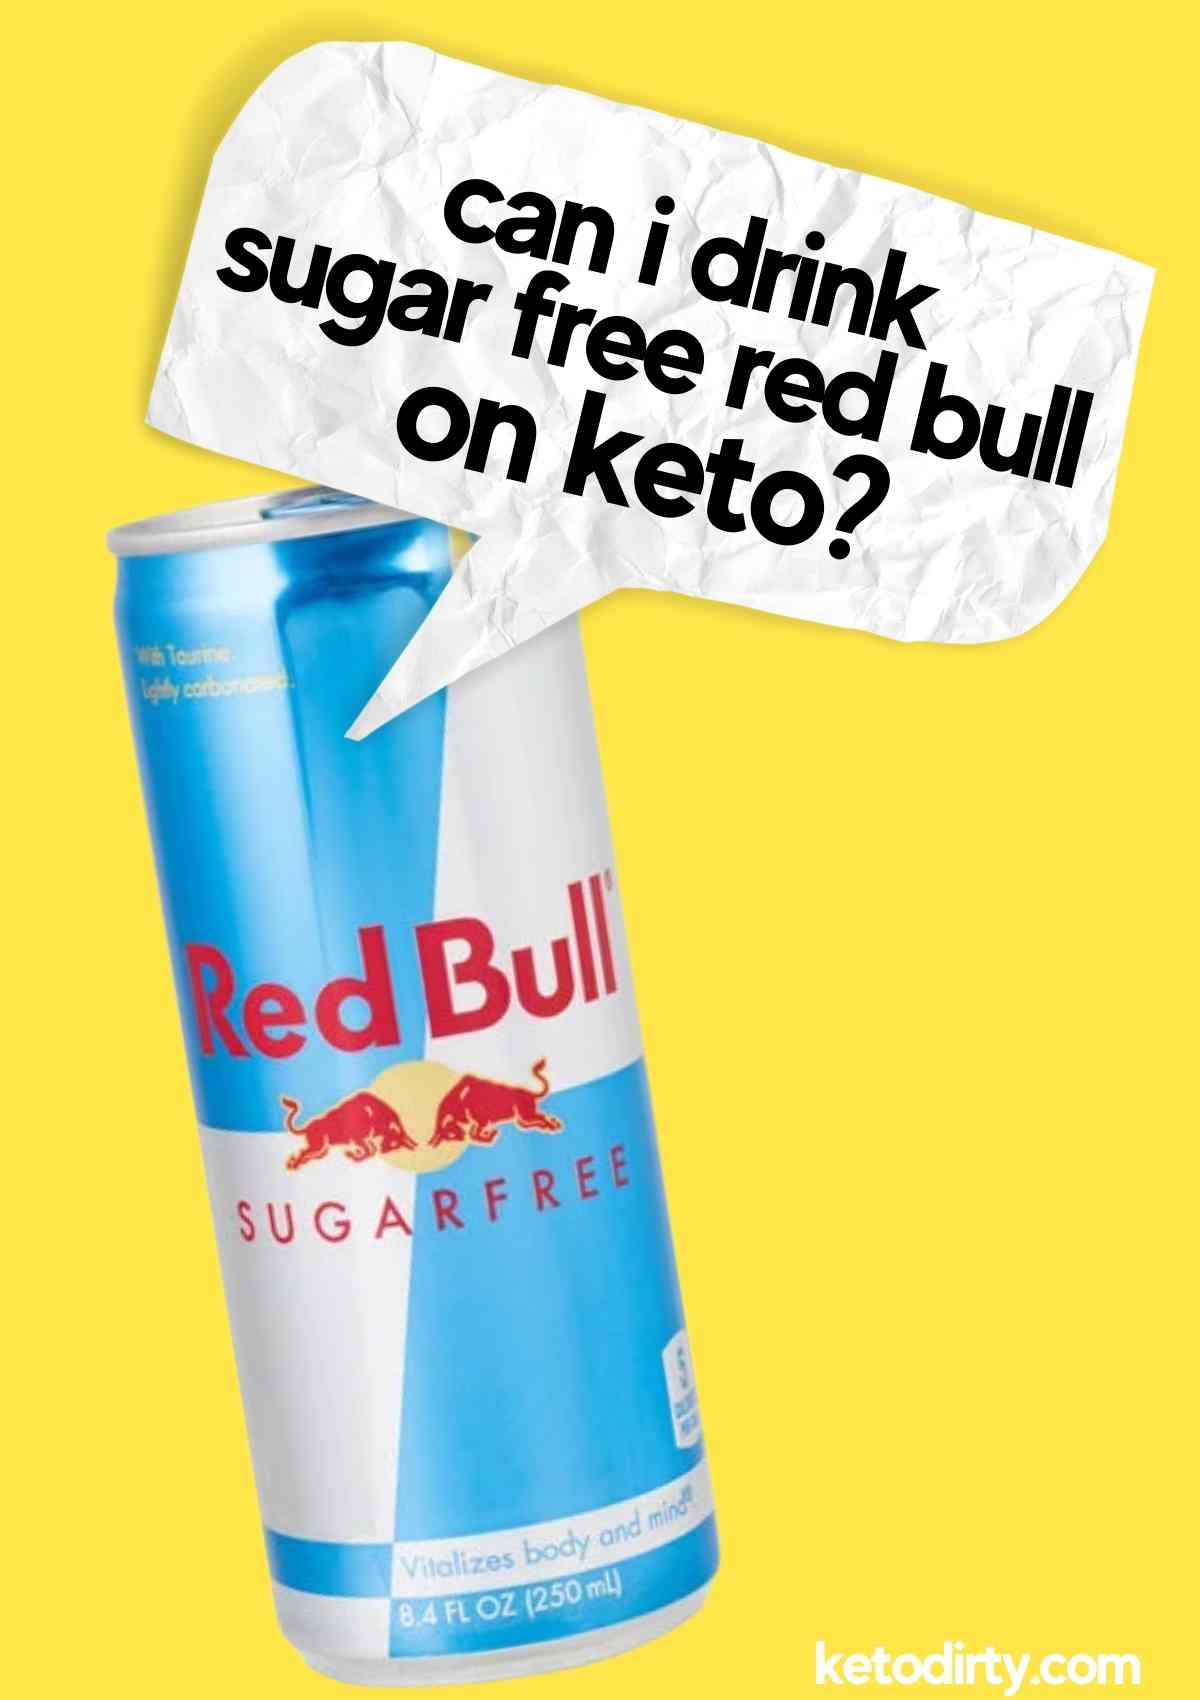 can i drink sugar free red bull keto